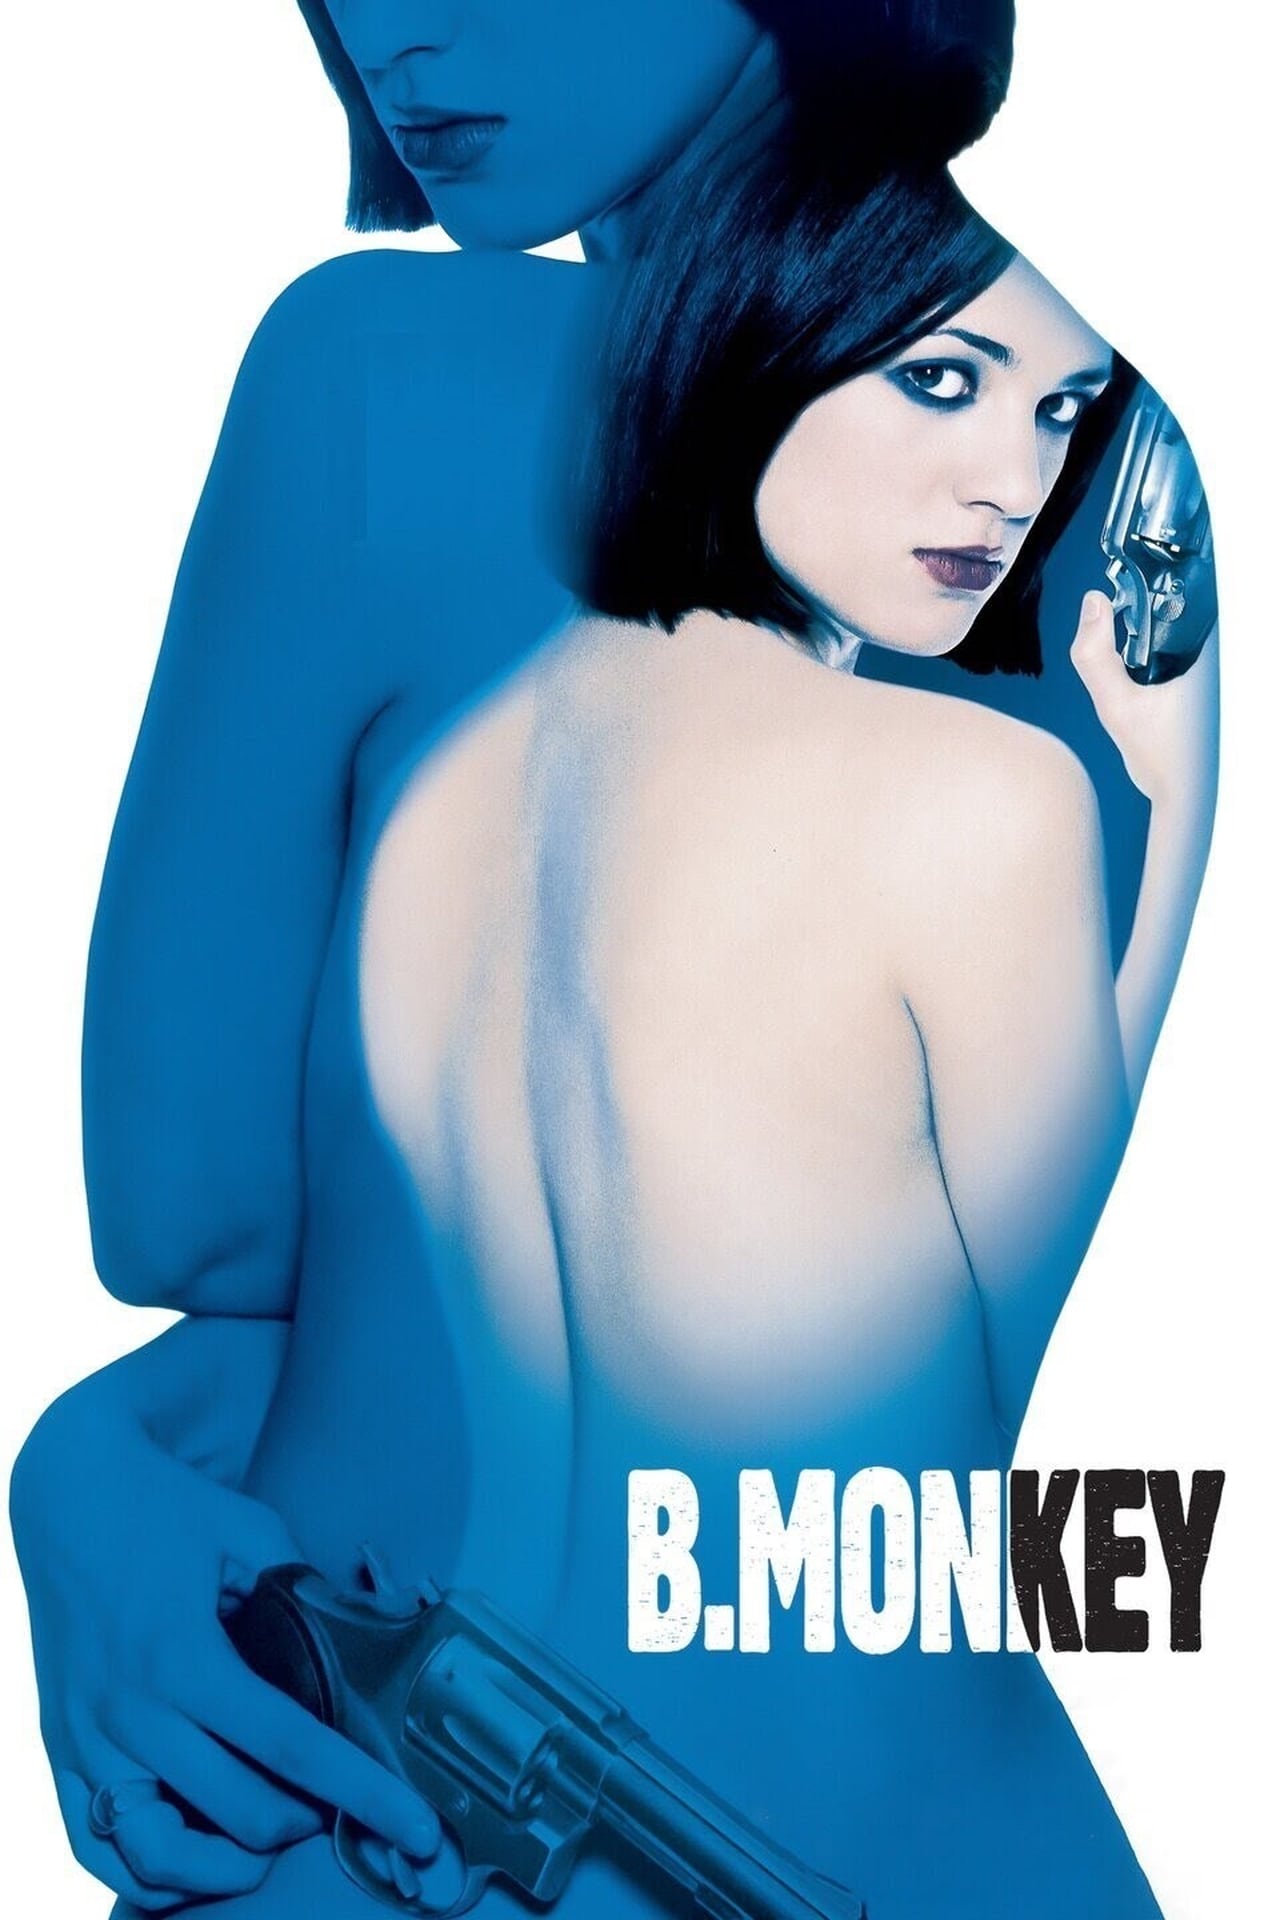 B. Monkey Dublado Online